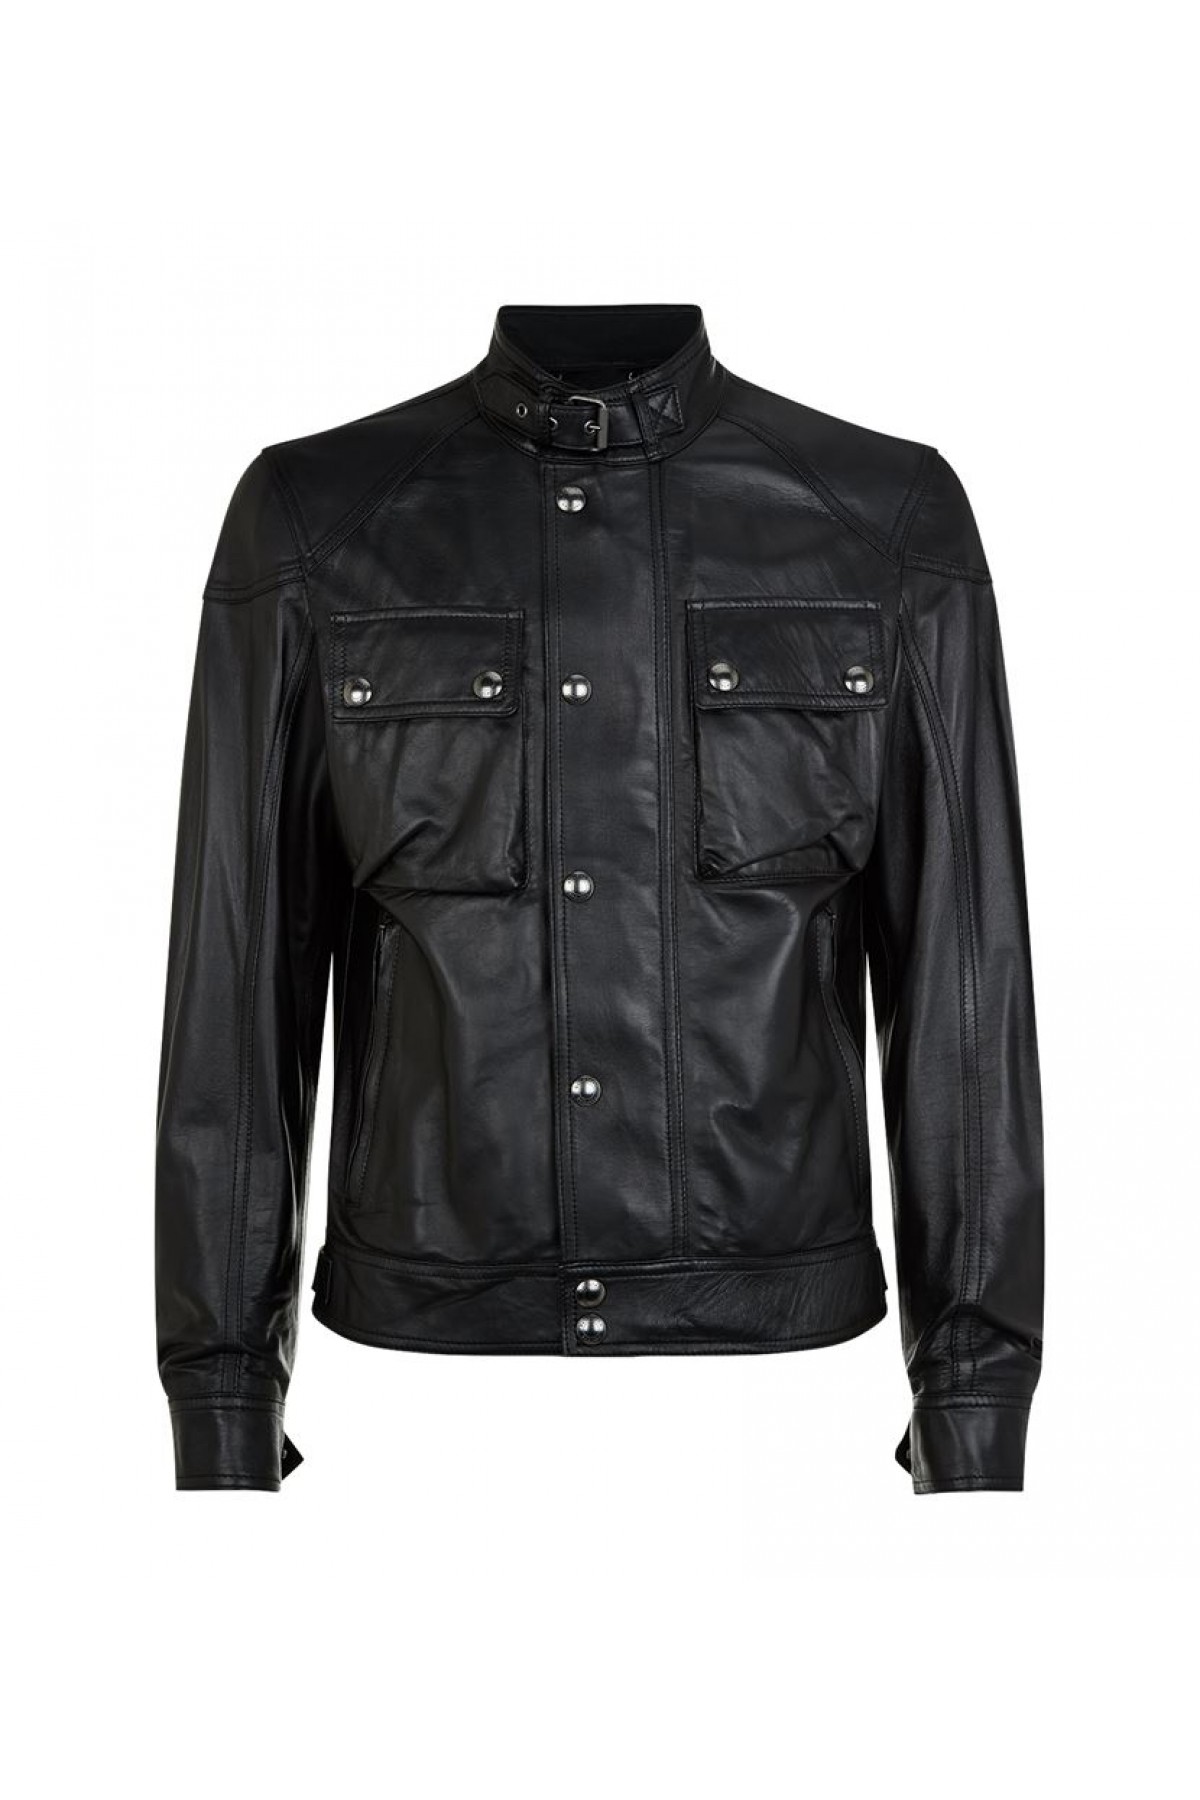 Hannibal Francis Dolarhyde Biker Leather Jacket